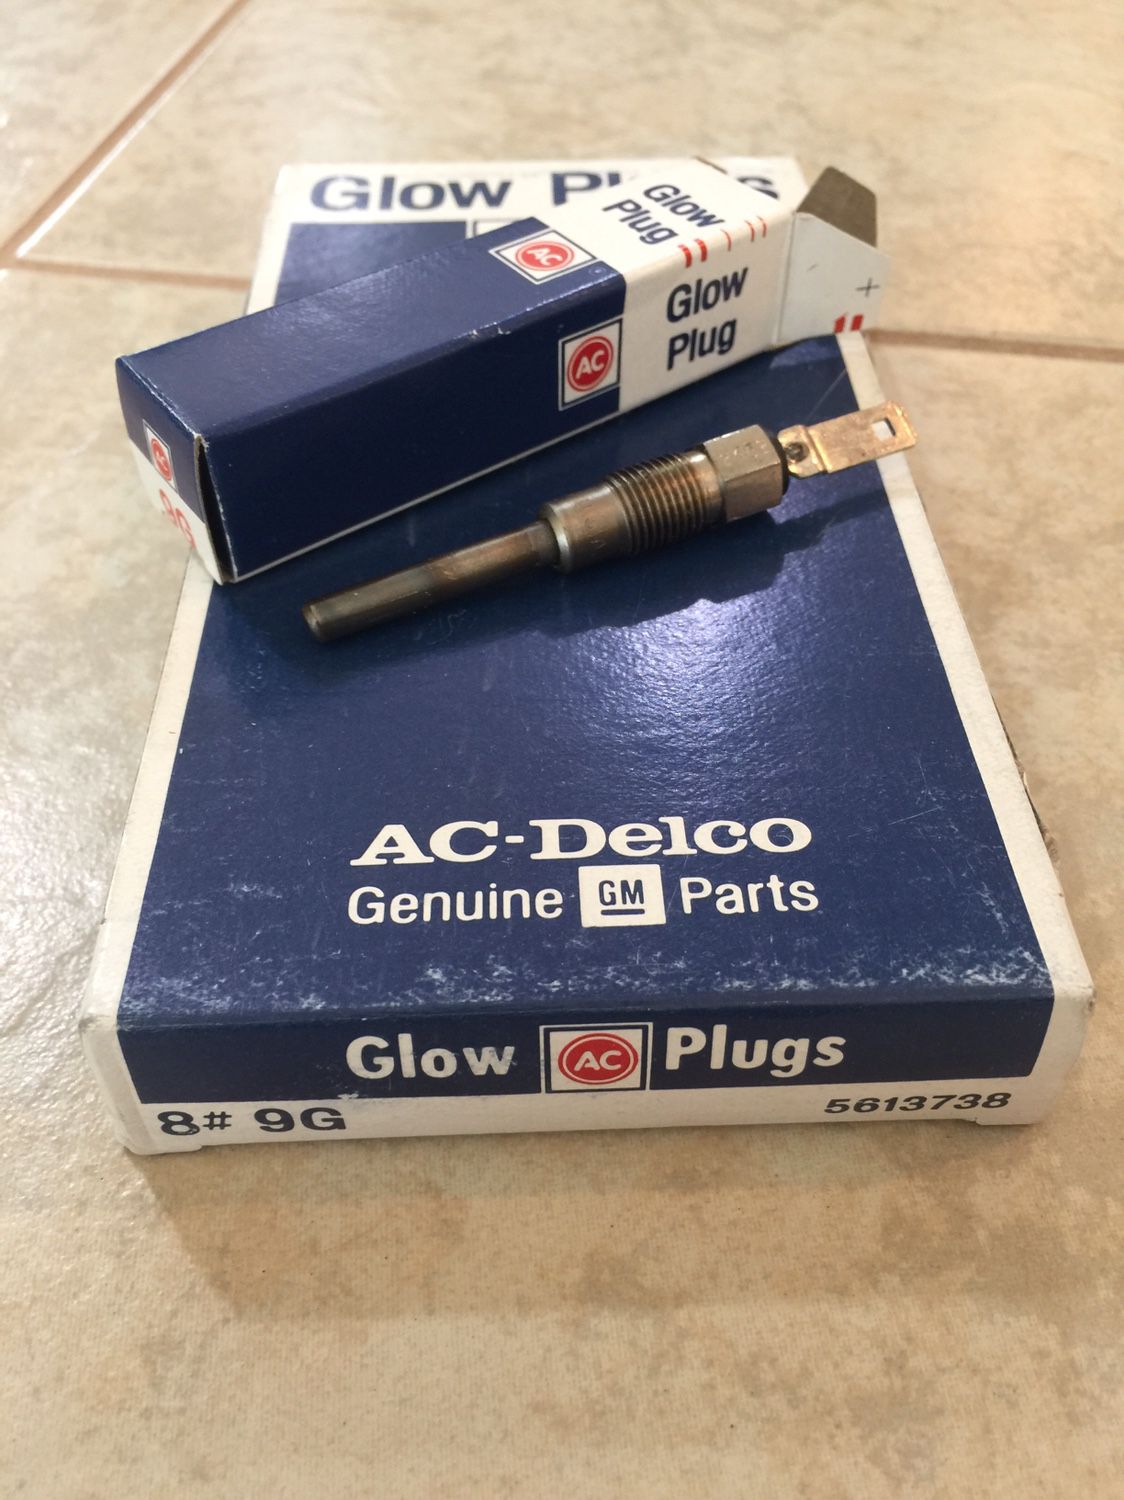 AC-Delco 9G Glow Plugs Qty 8